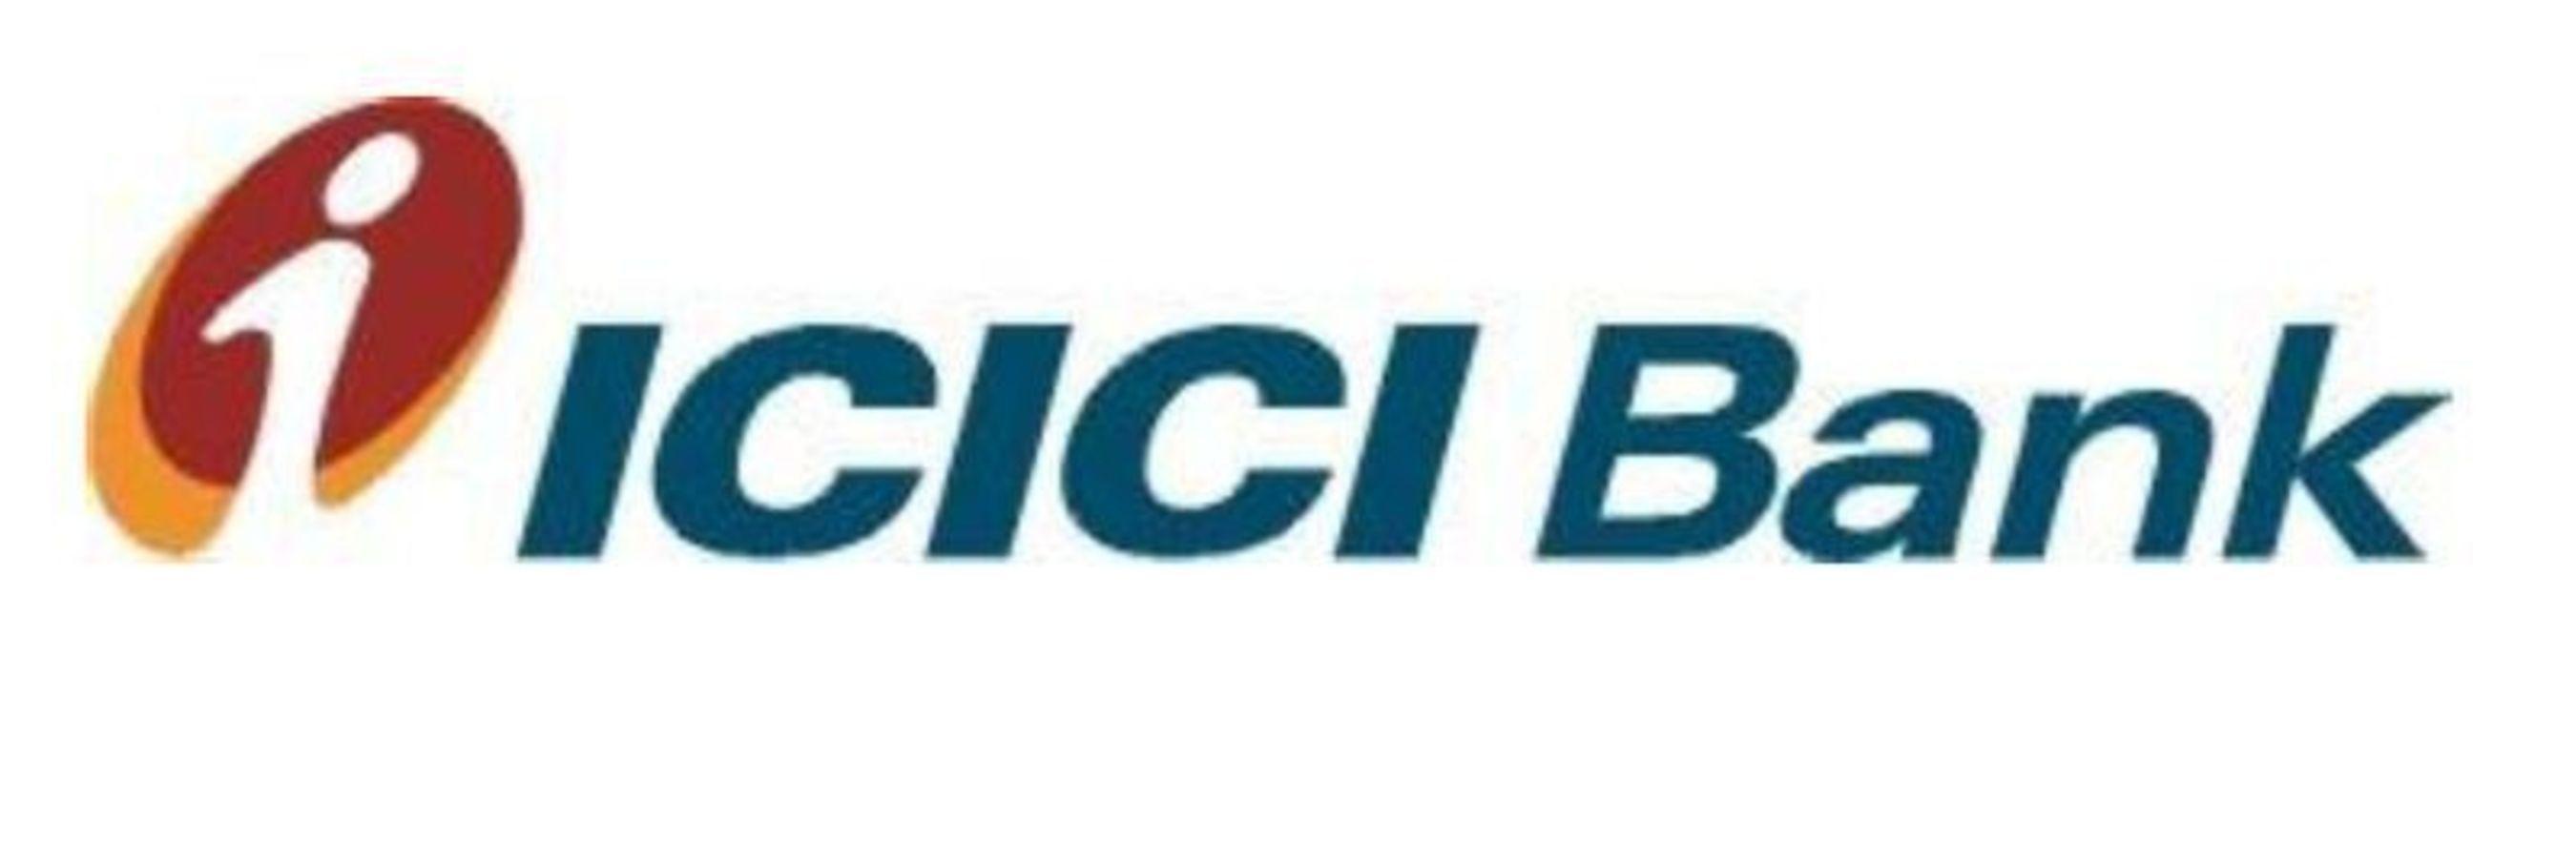 ICICI Bank Logo - ICICI Bank Ltd Launches 'Video Banking ...